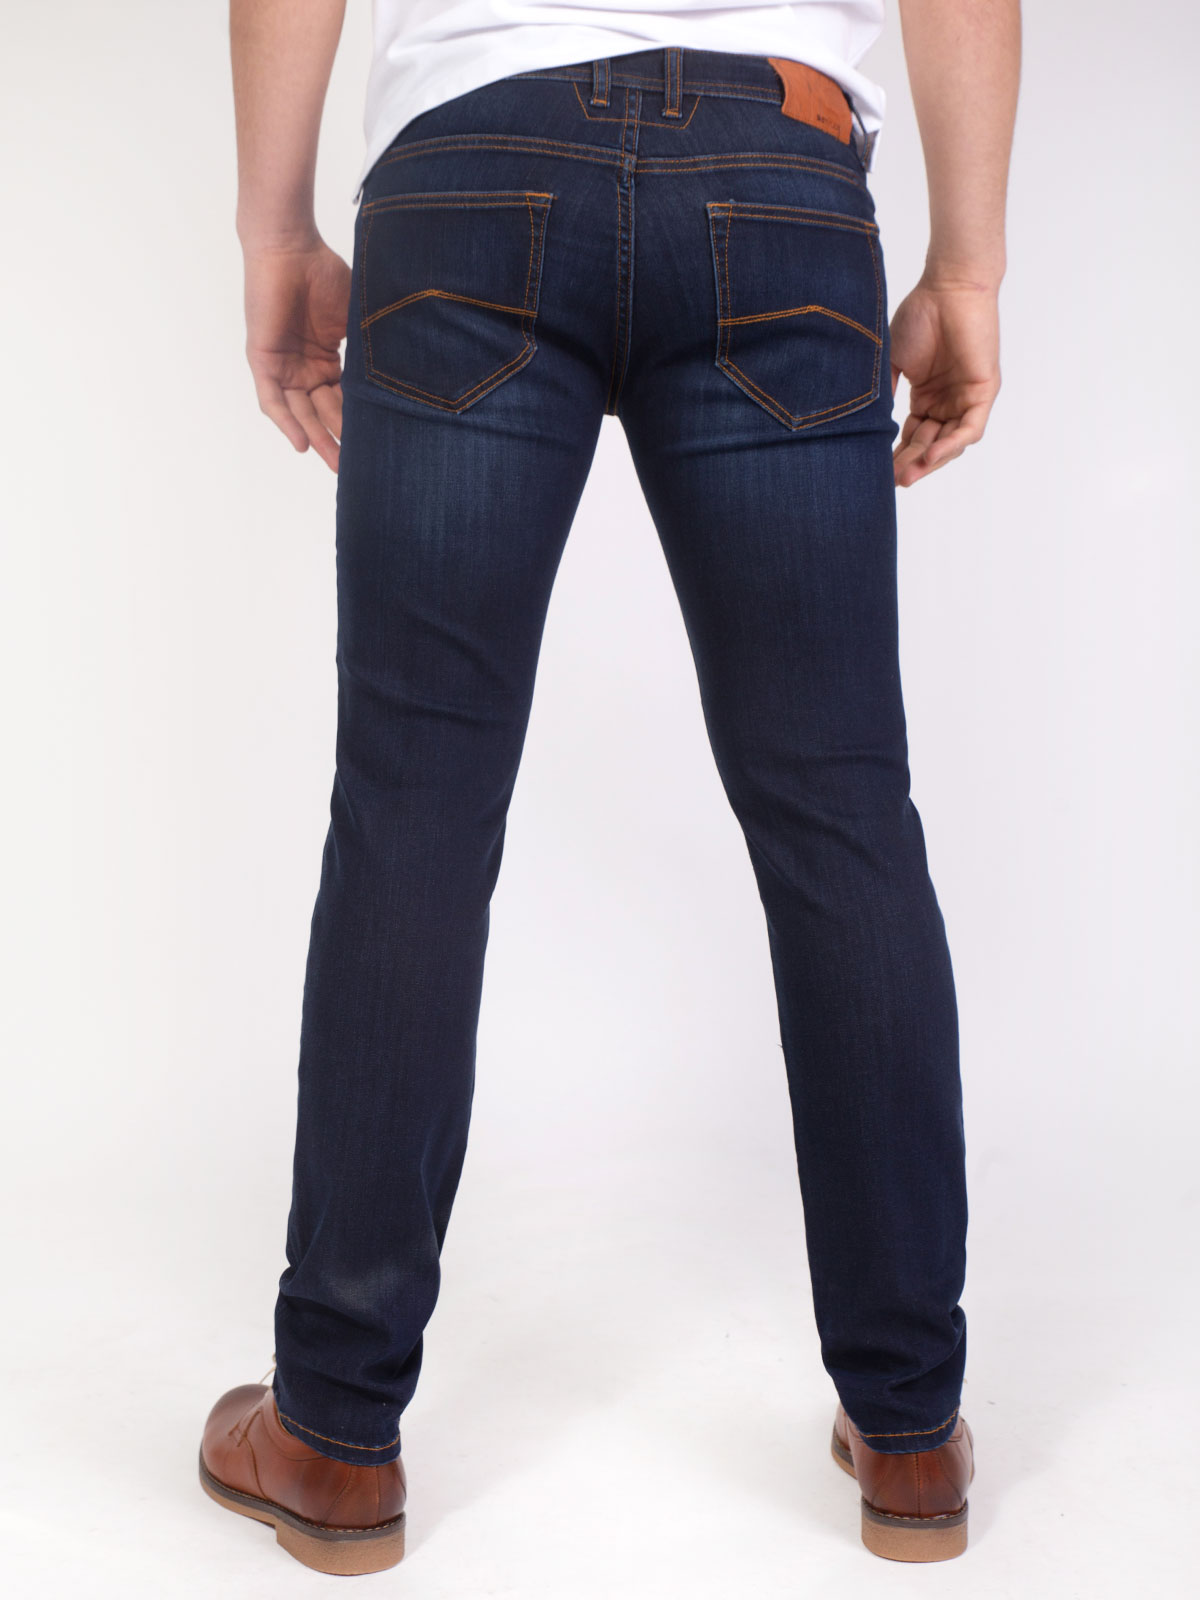 Men Comfort Fit Color Denim Jeans at Rs 745/piece in New Delhi | ID:  15311915591